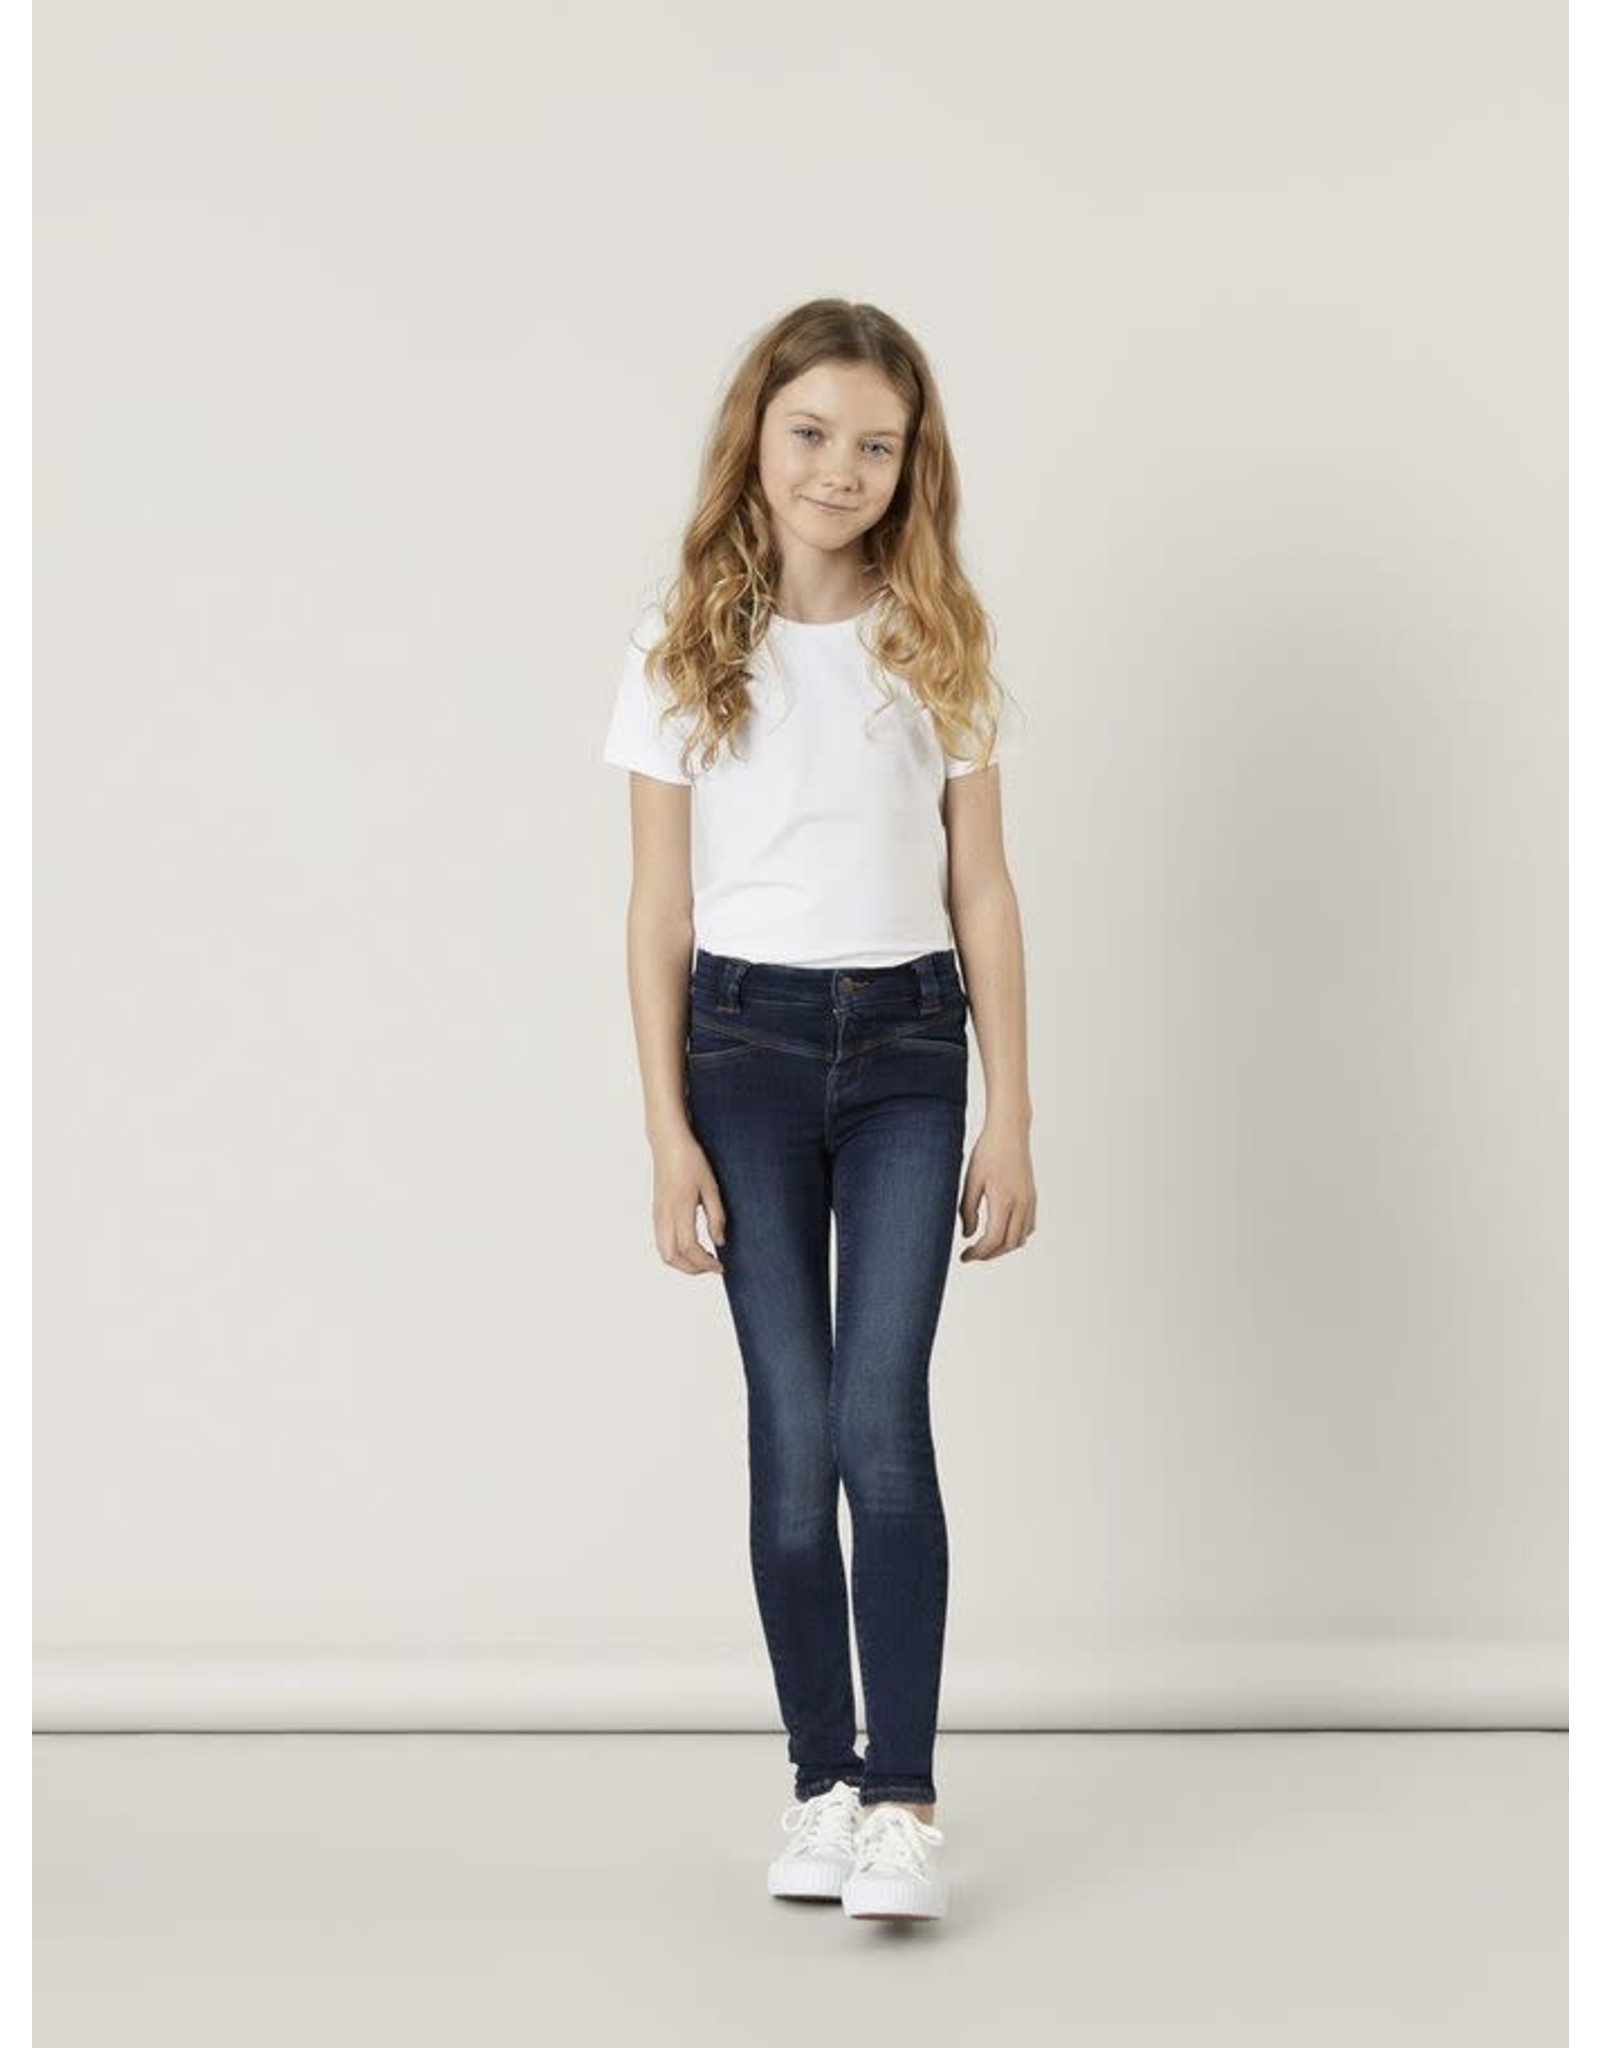 dinsdag Kudde Schandelijk Donkerblauwe skinny jeans voor meisjes van Name It | hejsan.be - Hejsan  Hoppsan